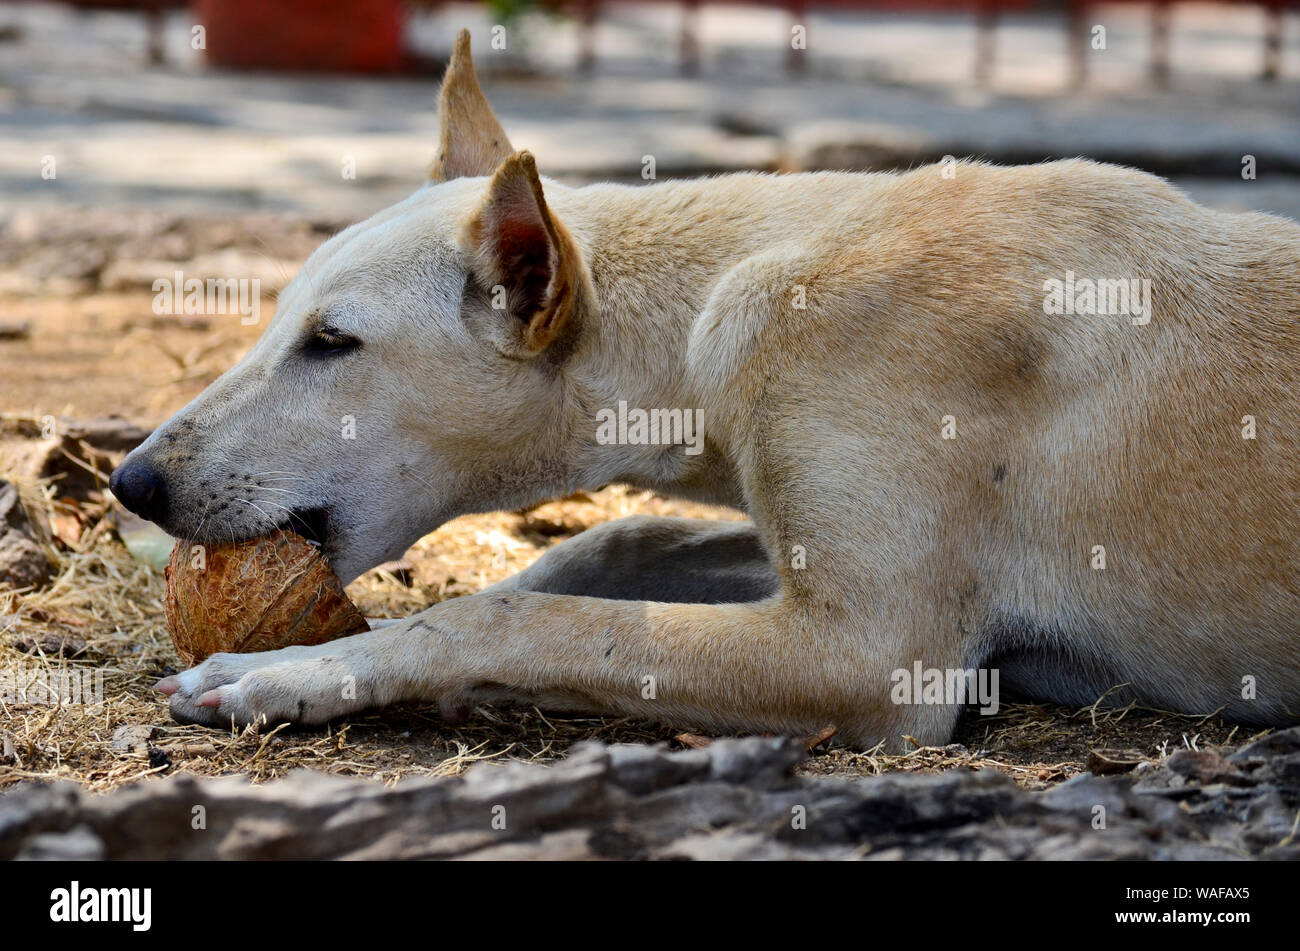 Dog eating coconut in Hampi, India Stock Photo